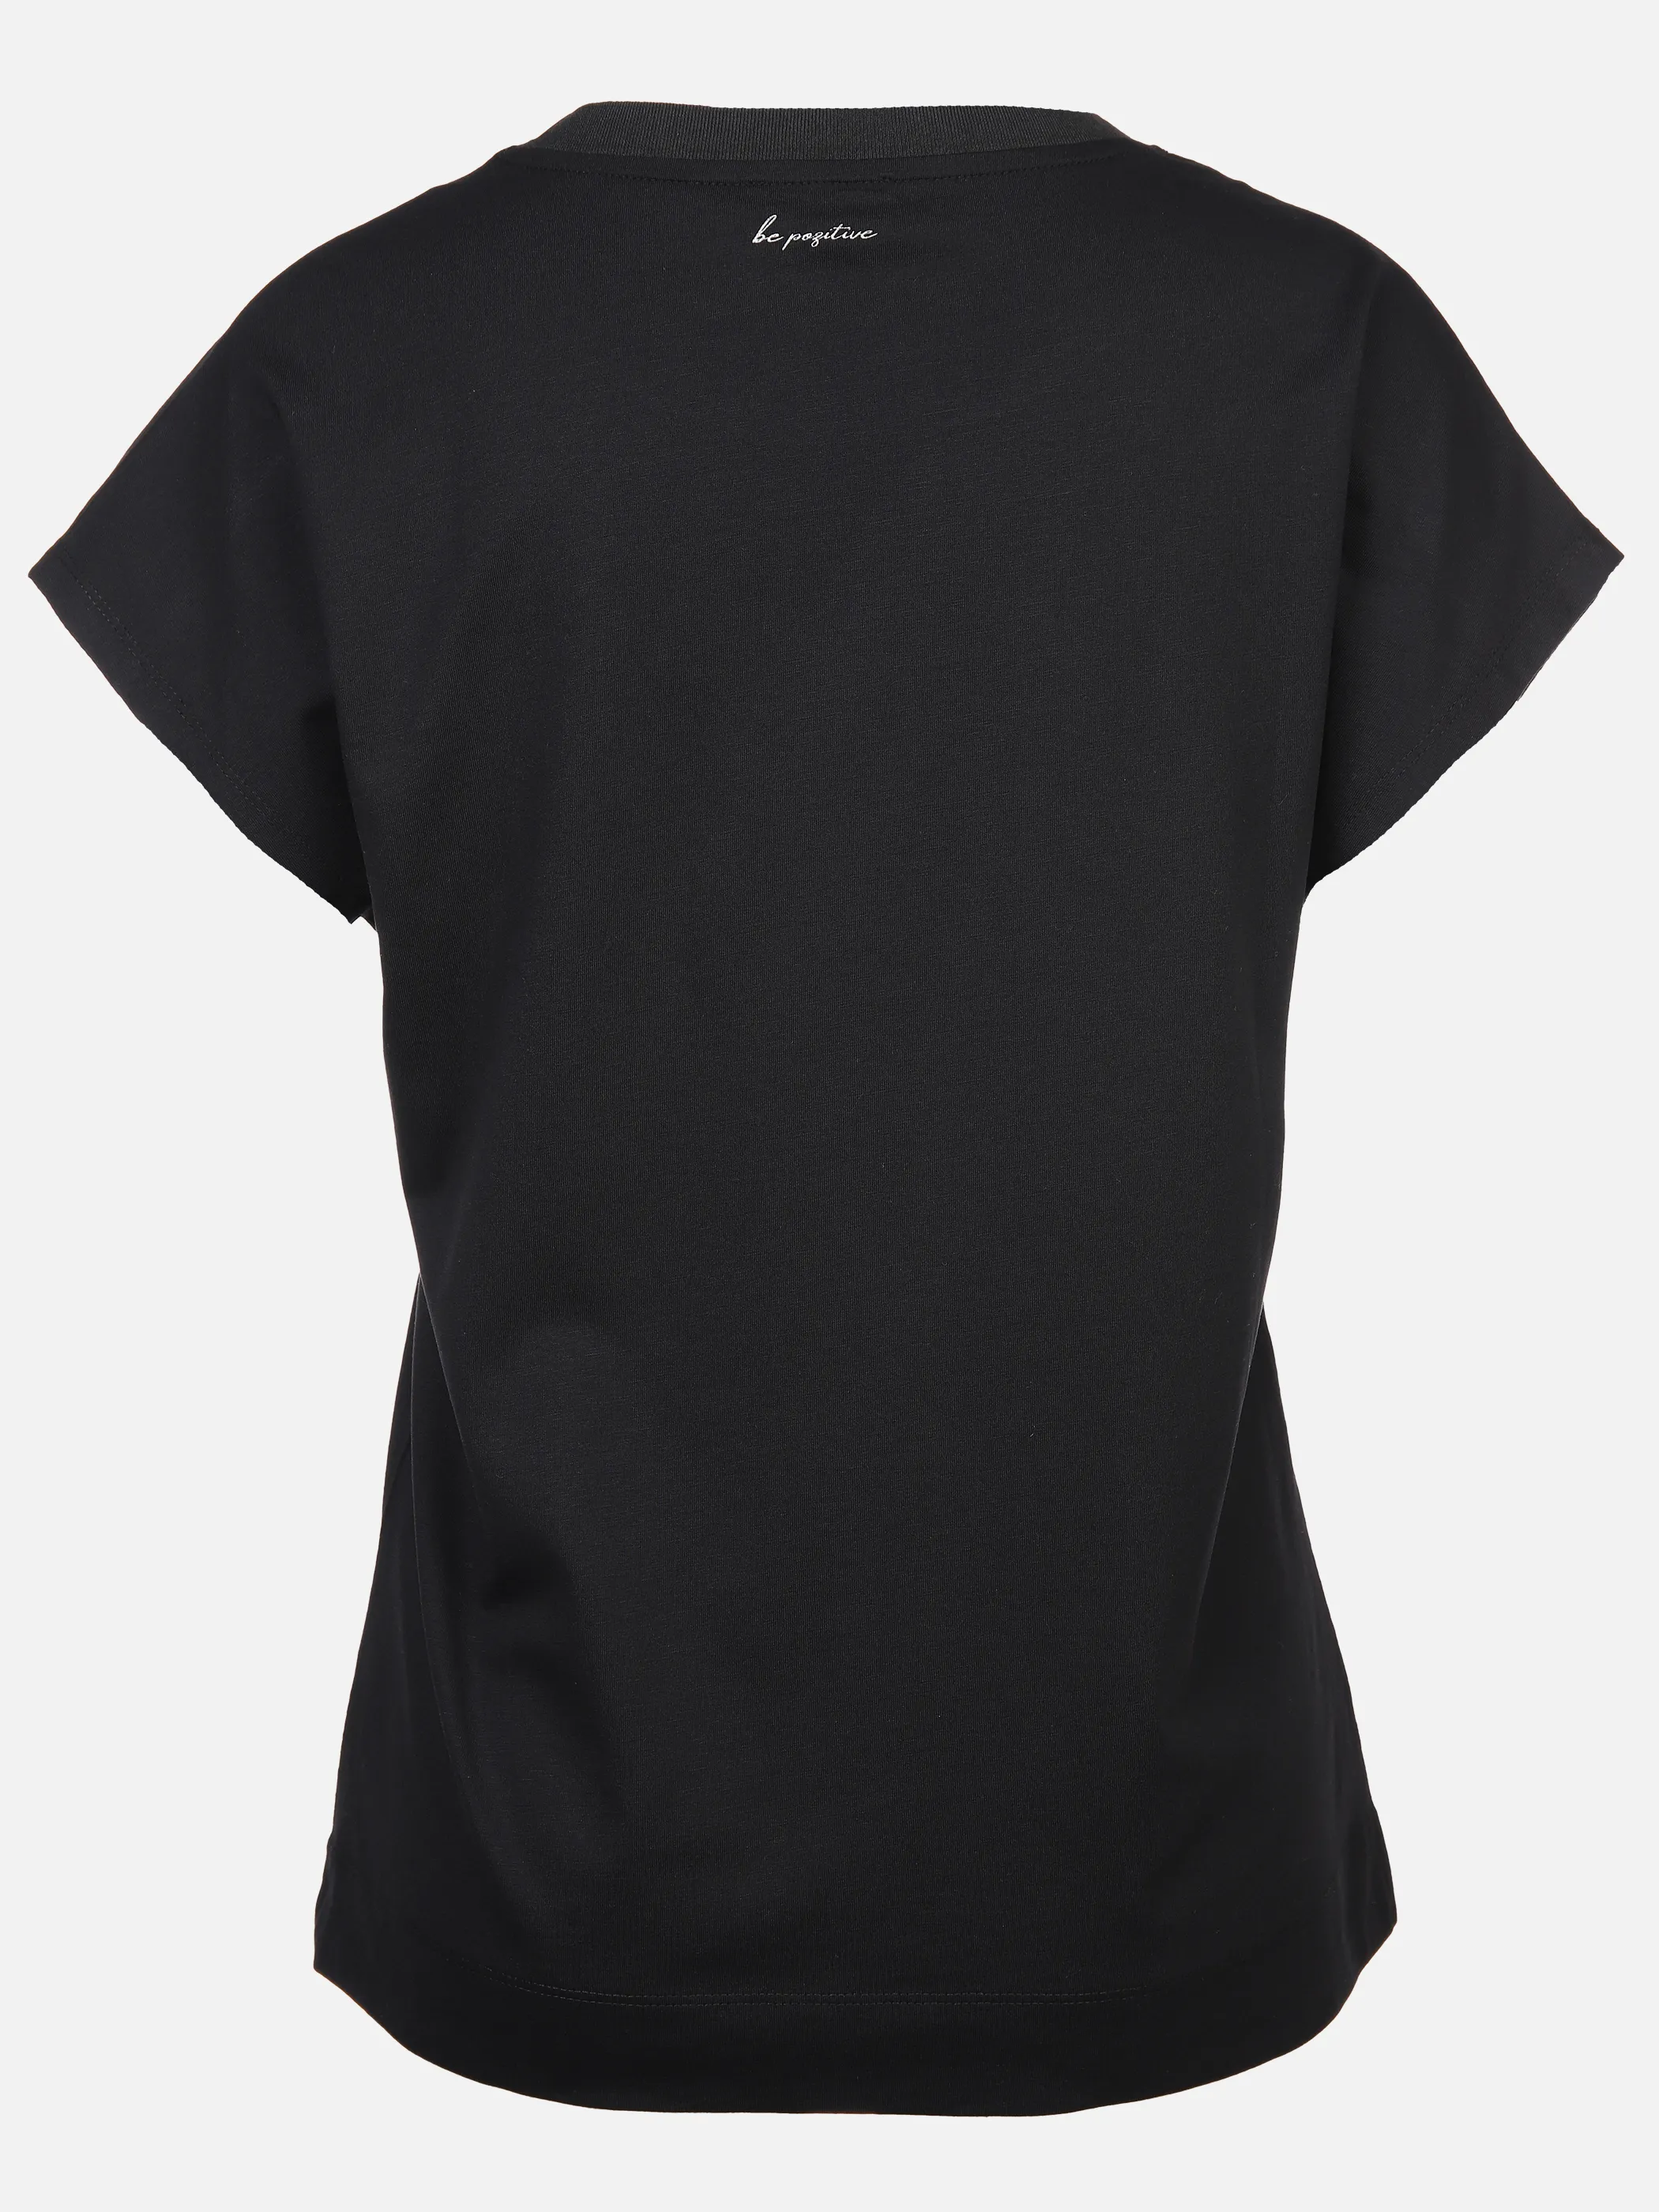 Lisa Tossa Da-T-Shirt m. Straßapplikation Schwarz 893032 BLACK 2